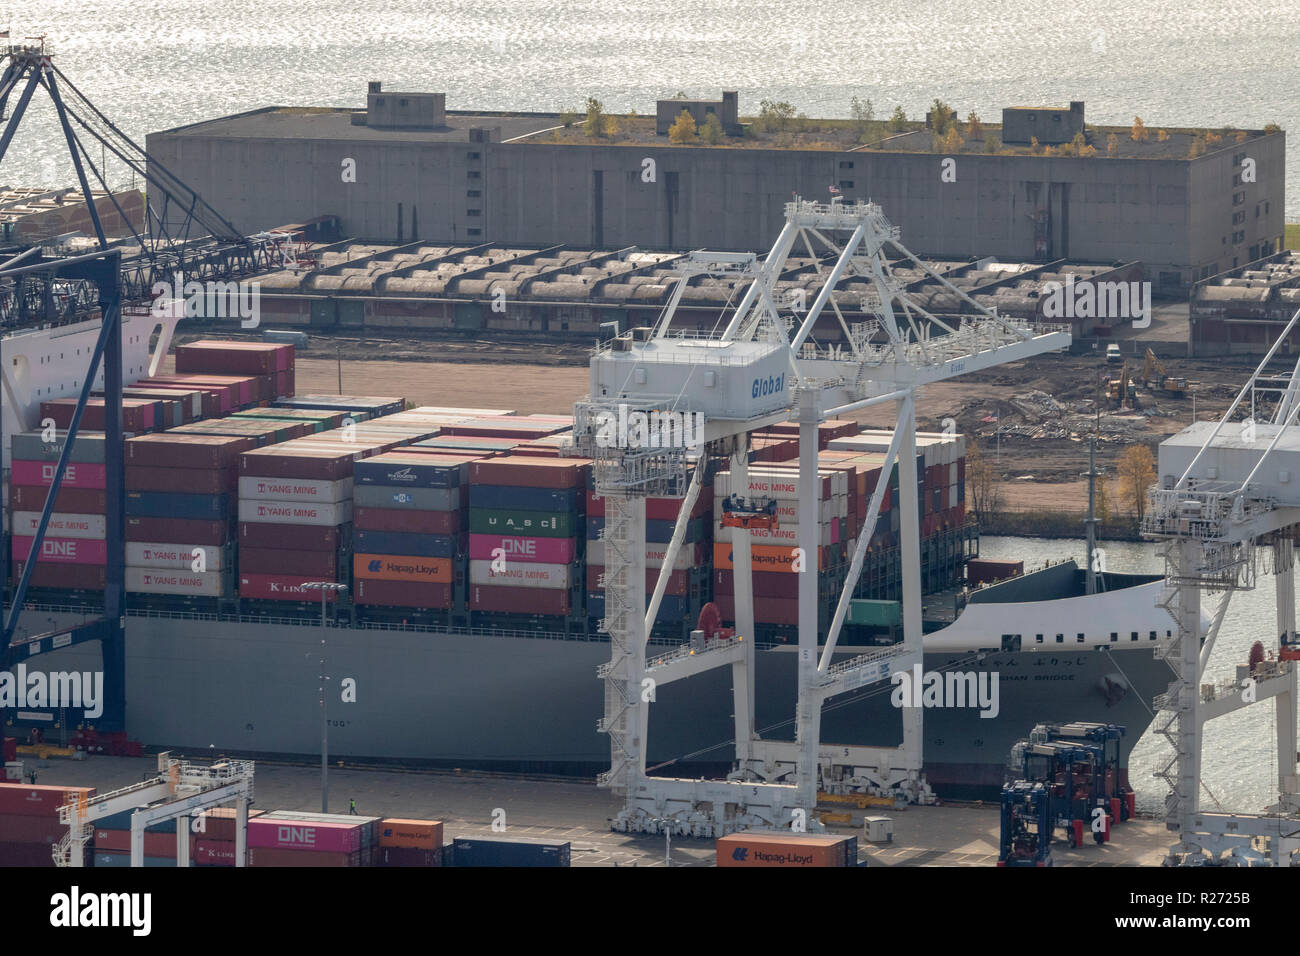 Elicottero vista aerea della nave portacontainer a GCT Bayonne terminal container, Bayonne, Jersey City, New Jersey, STATI UNITI D'AMERICA Foto Stock